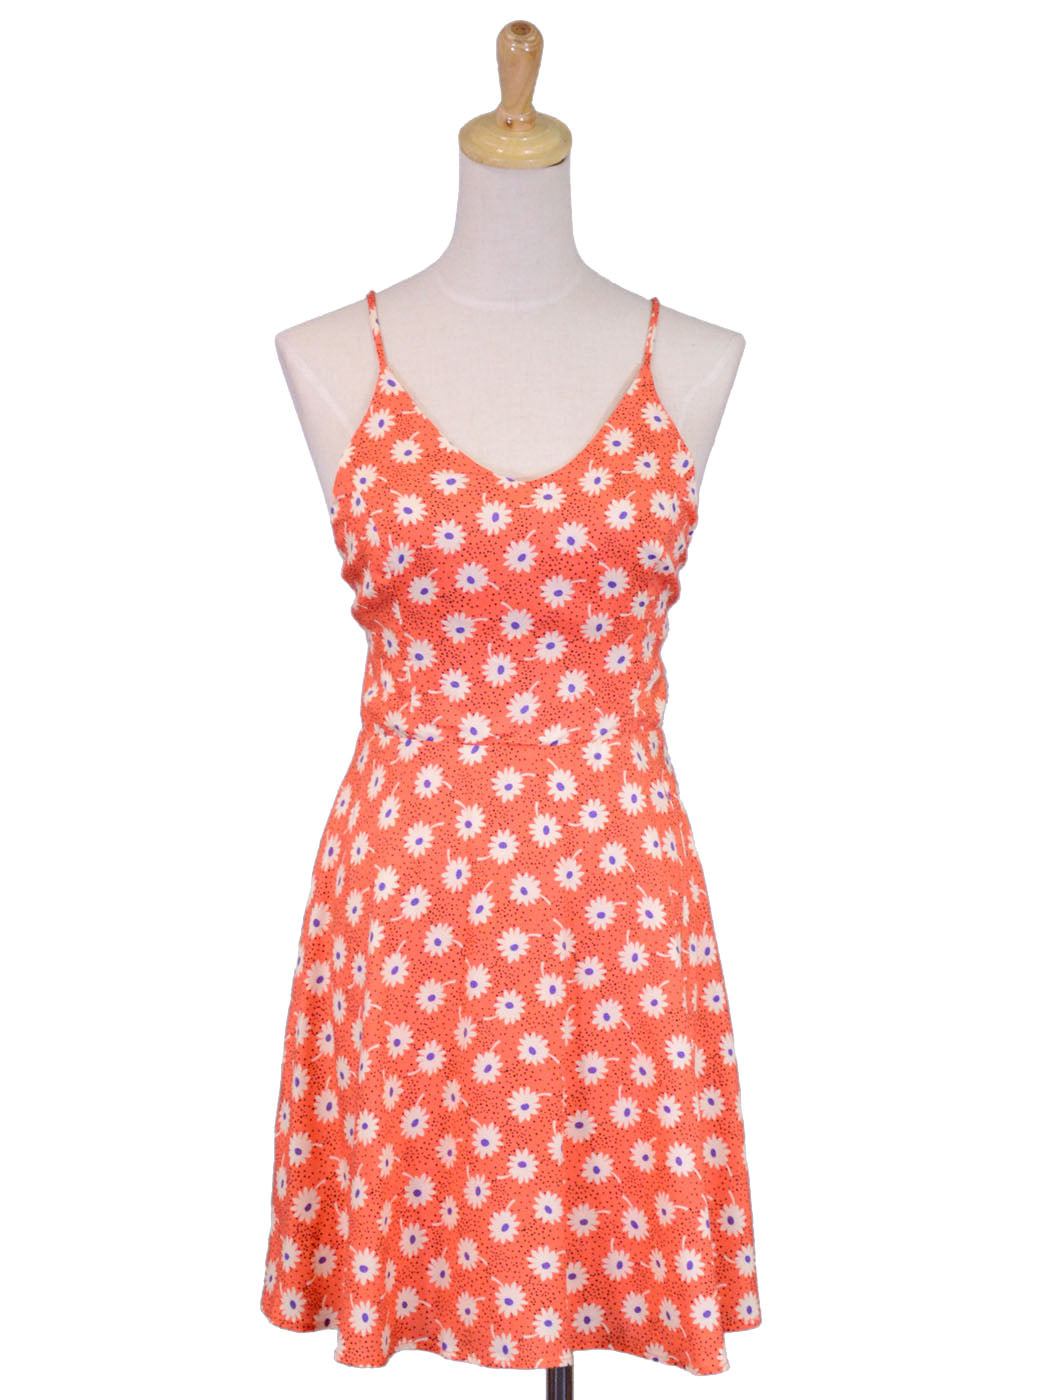 Lush Orange Daisy Floral Printed Spaghetti Strap Bare Back Flare Girly Dress - ALILANG.COM